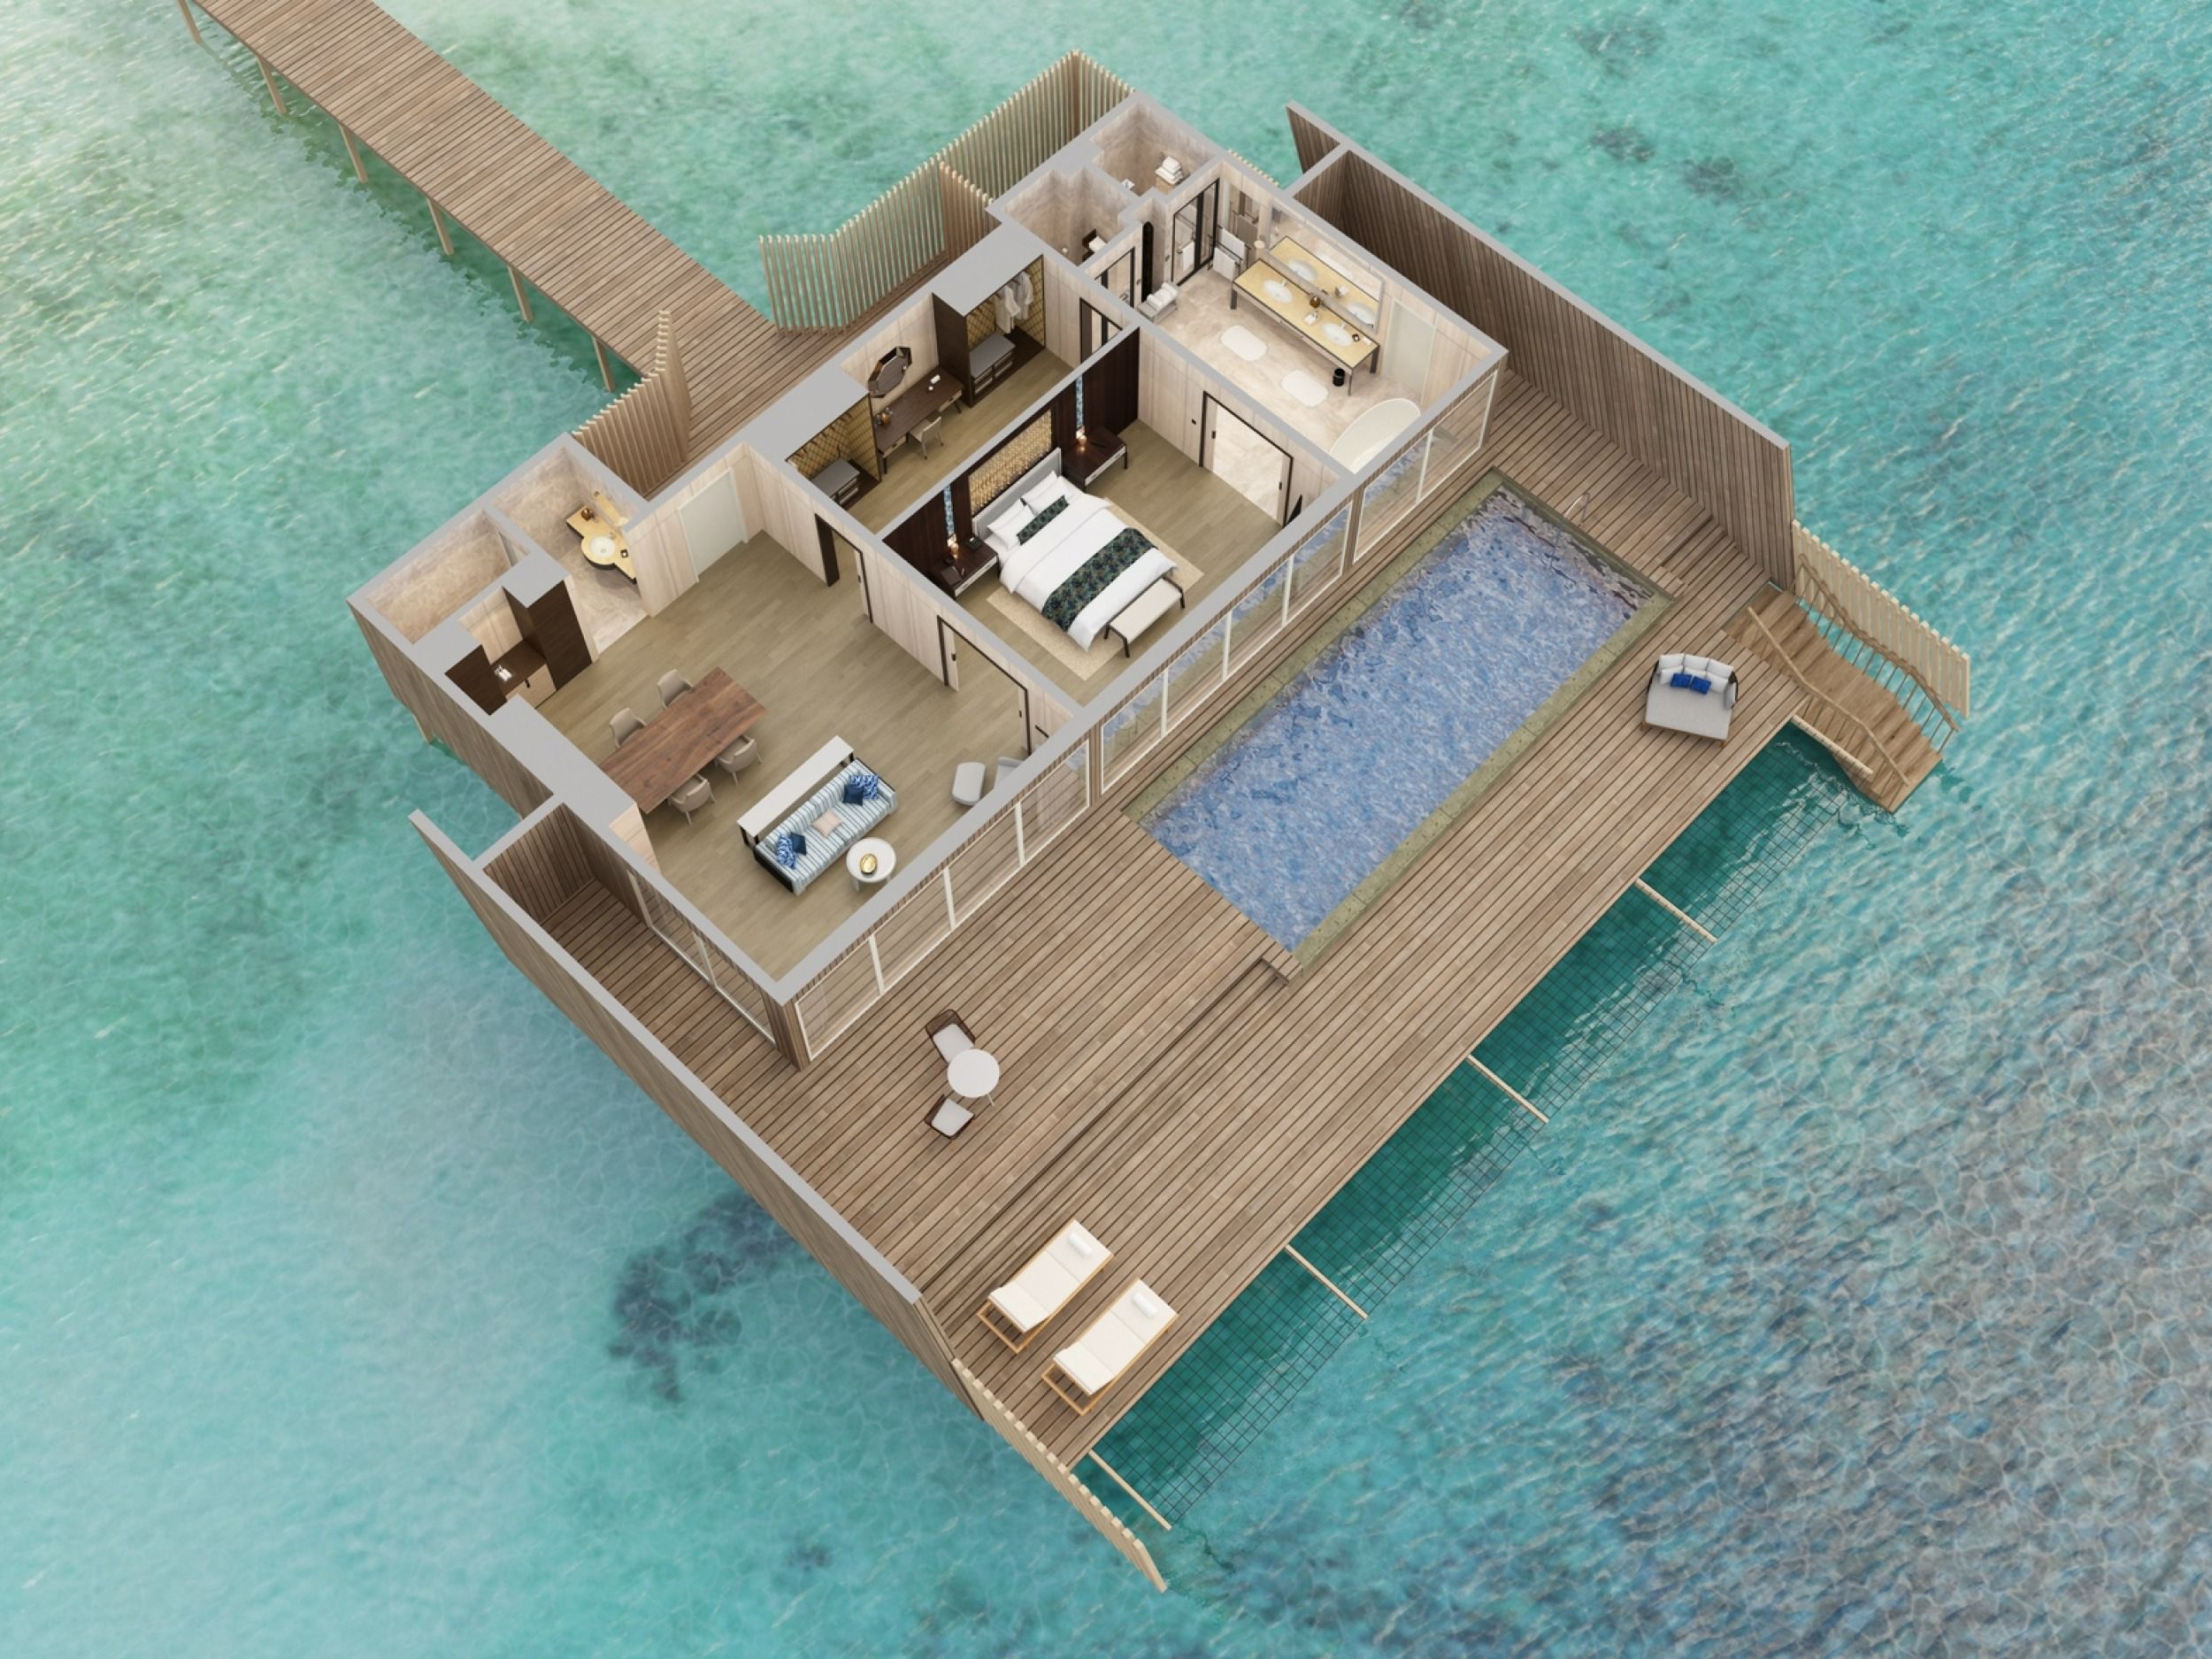 Lagoon Overwater St. Regis Suite with Pool
- Floor Plan - The St. Regis Maldives Vommuli Resort